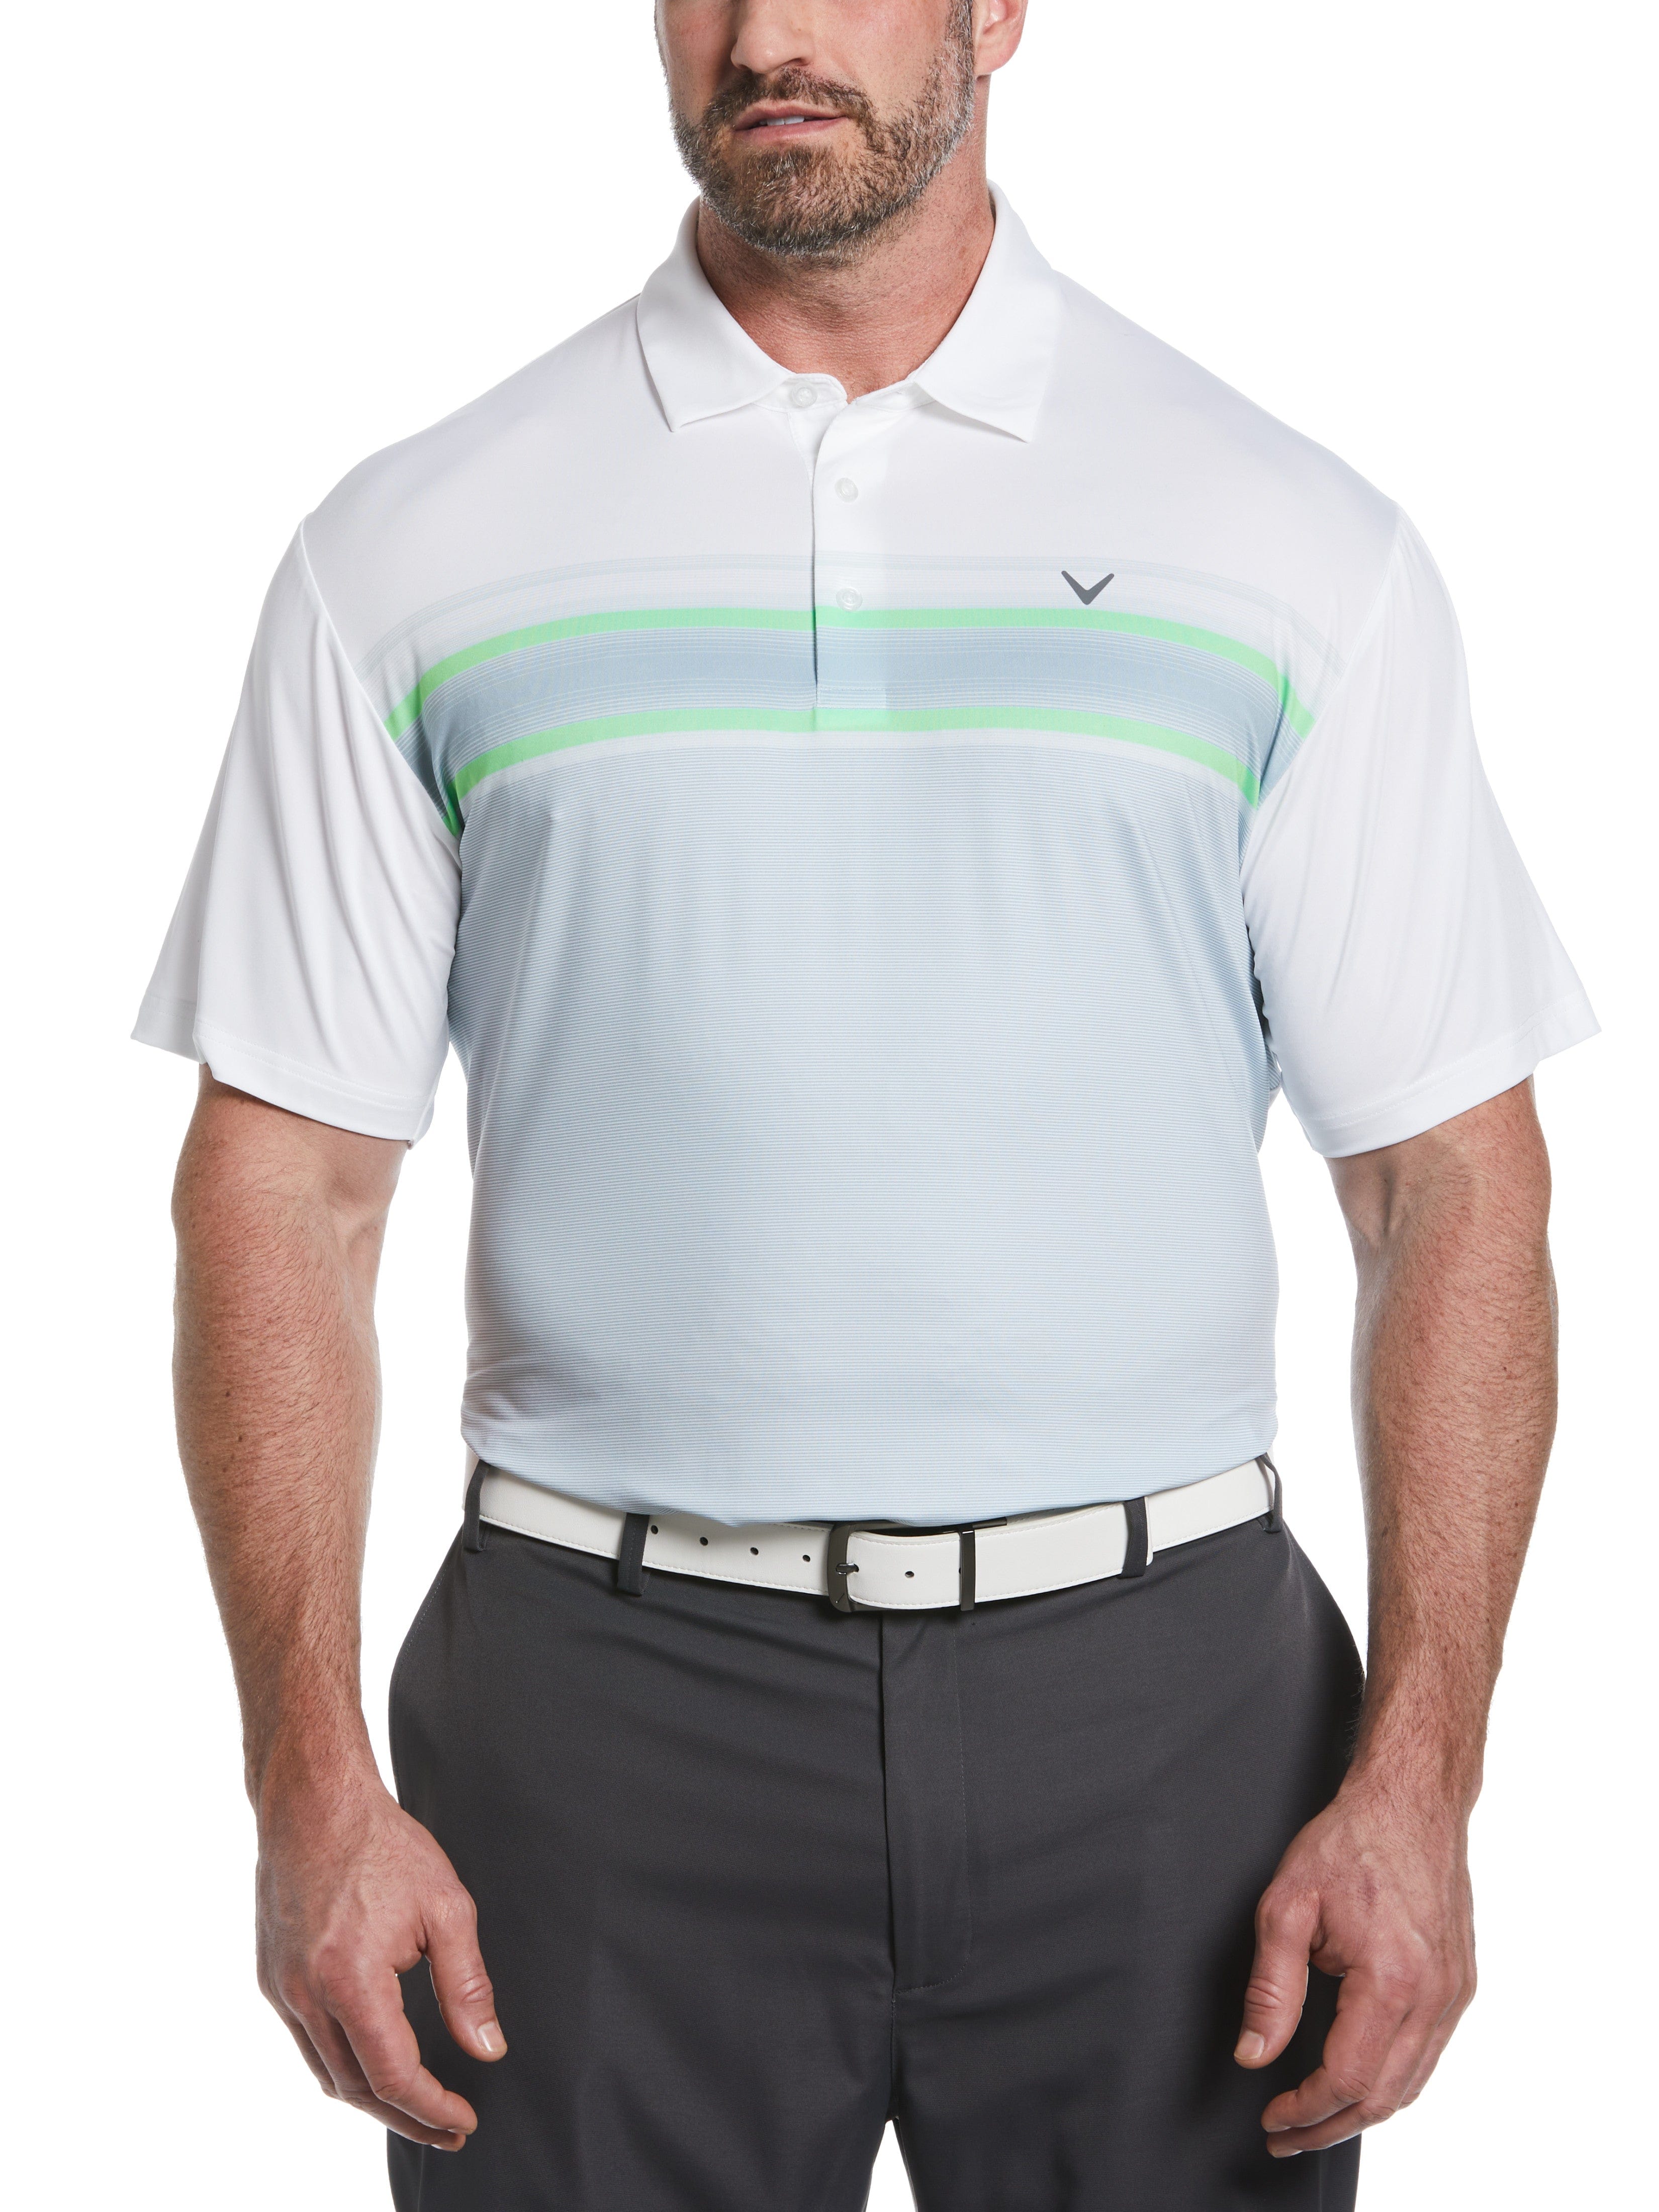 Callaway Apparel Mens Big & Tall Engineered Energy Print Stripe Golf Polo Shirt, Size 1X, White, Polyester/Spandex | Golf Apparel Shop